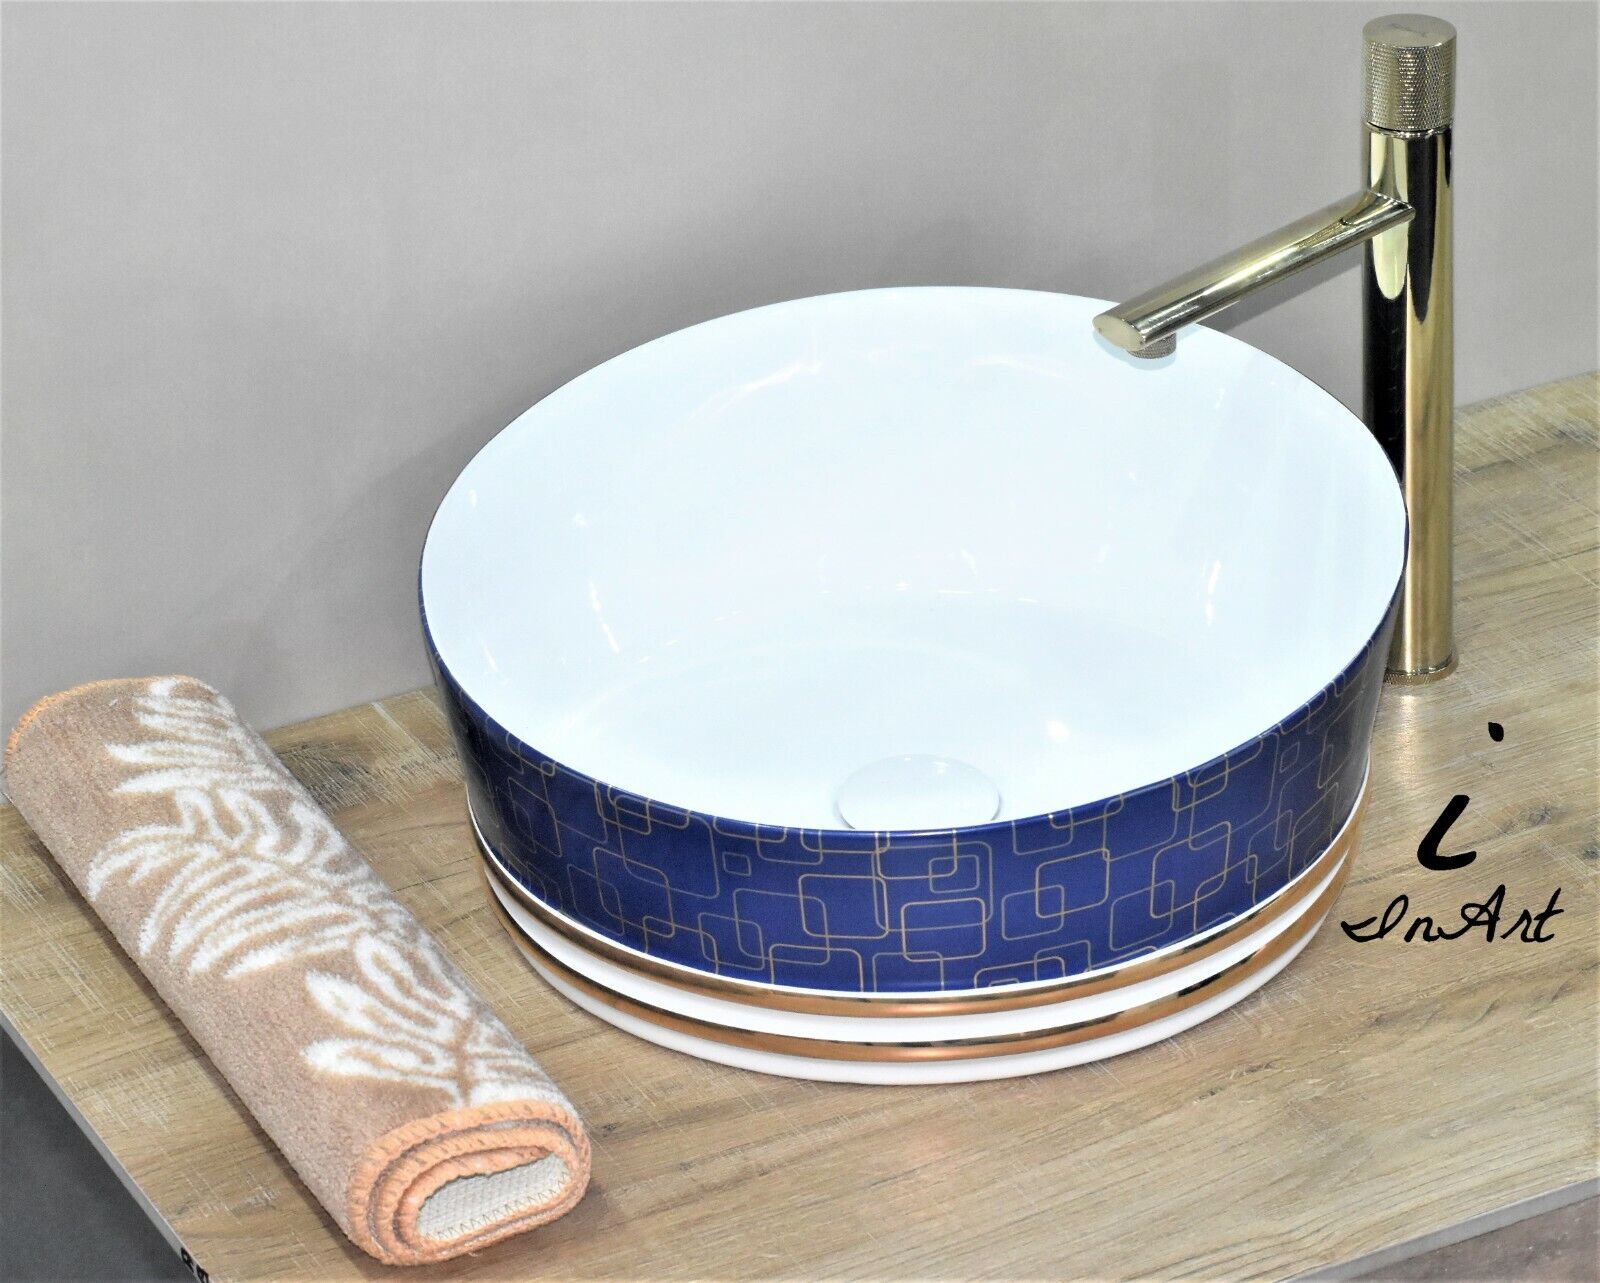 InArt Ceramic Round Shape Above Counter Top Wash Basin Bathroom Porcelain Vessel Sink Bowl For Lavatory/Bathroom 41 x 41 x 18 Cm (Blue White) - InArt-Studio-USA